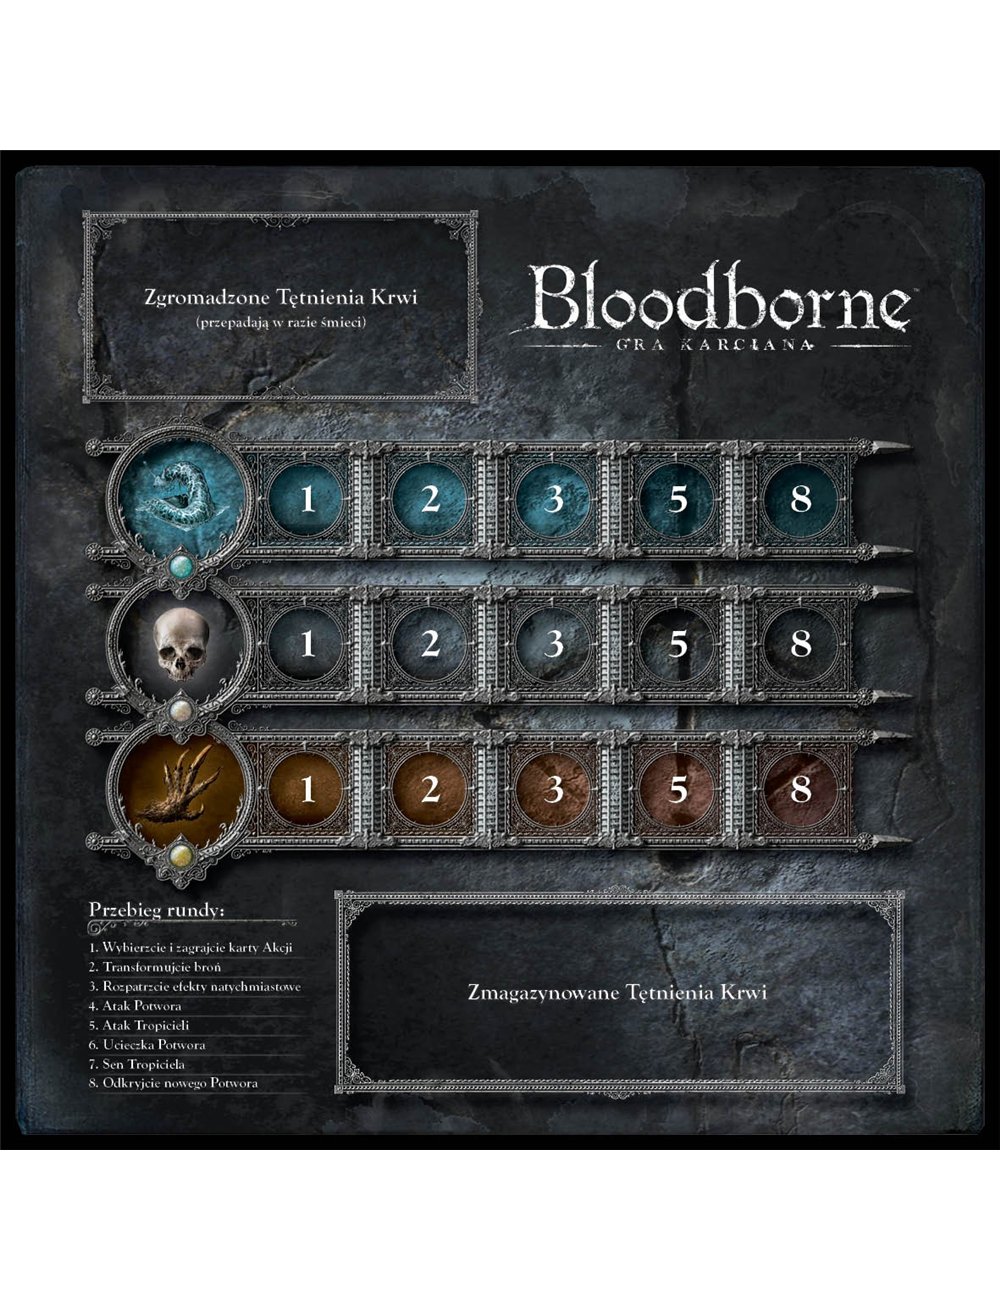 Bloodborne: Gra Karciana